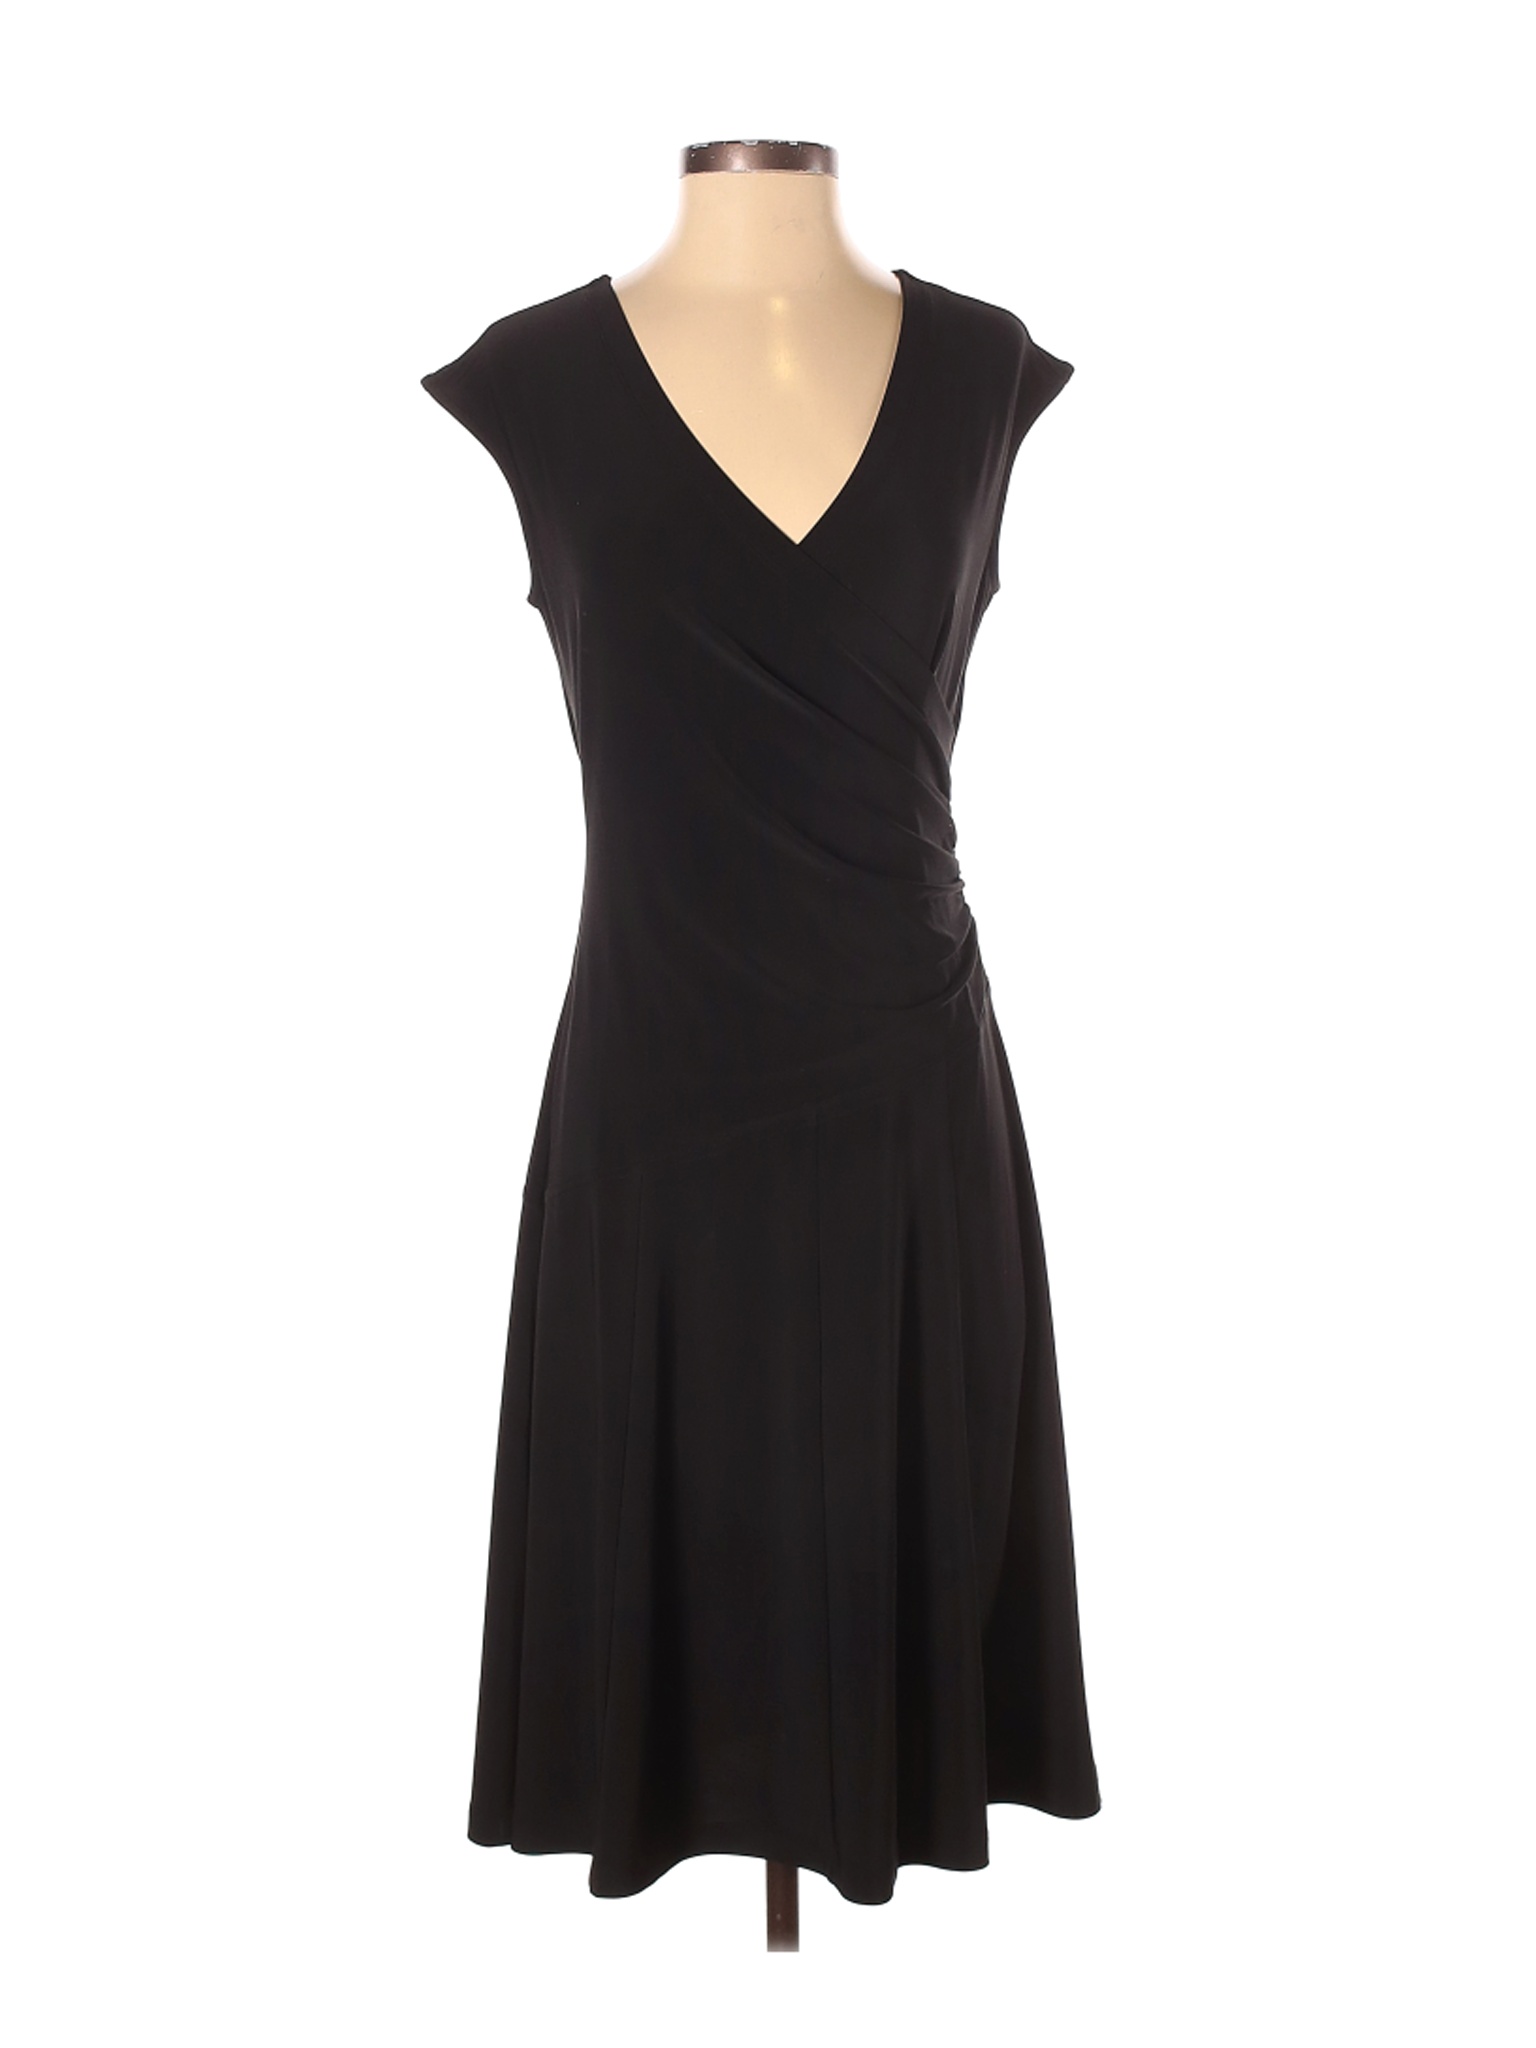 Nic + Zoe Women Black Casual Dress S | eBay